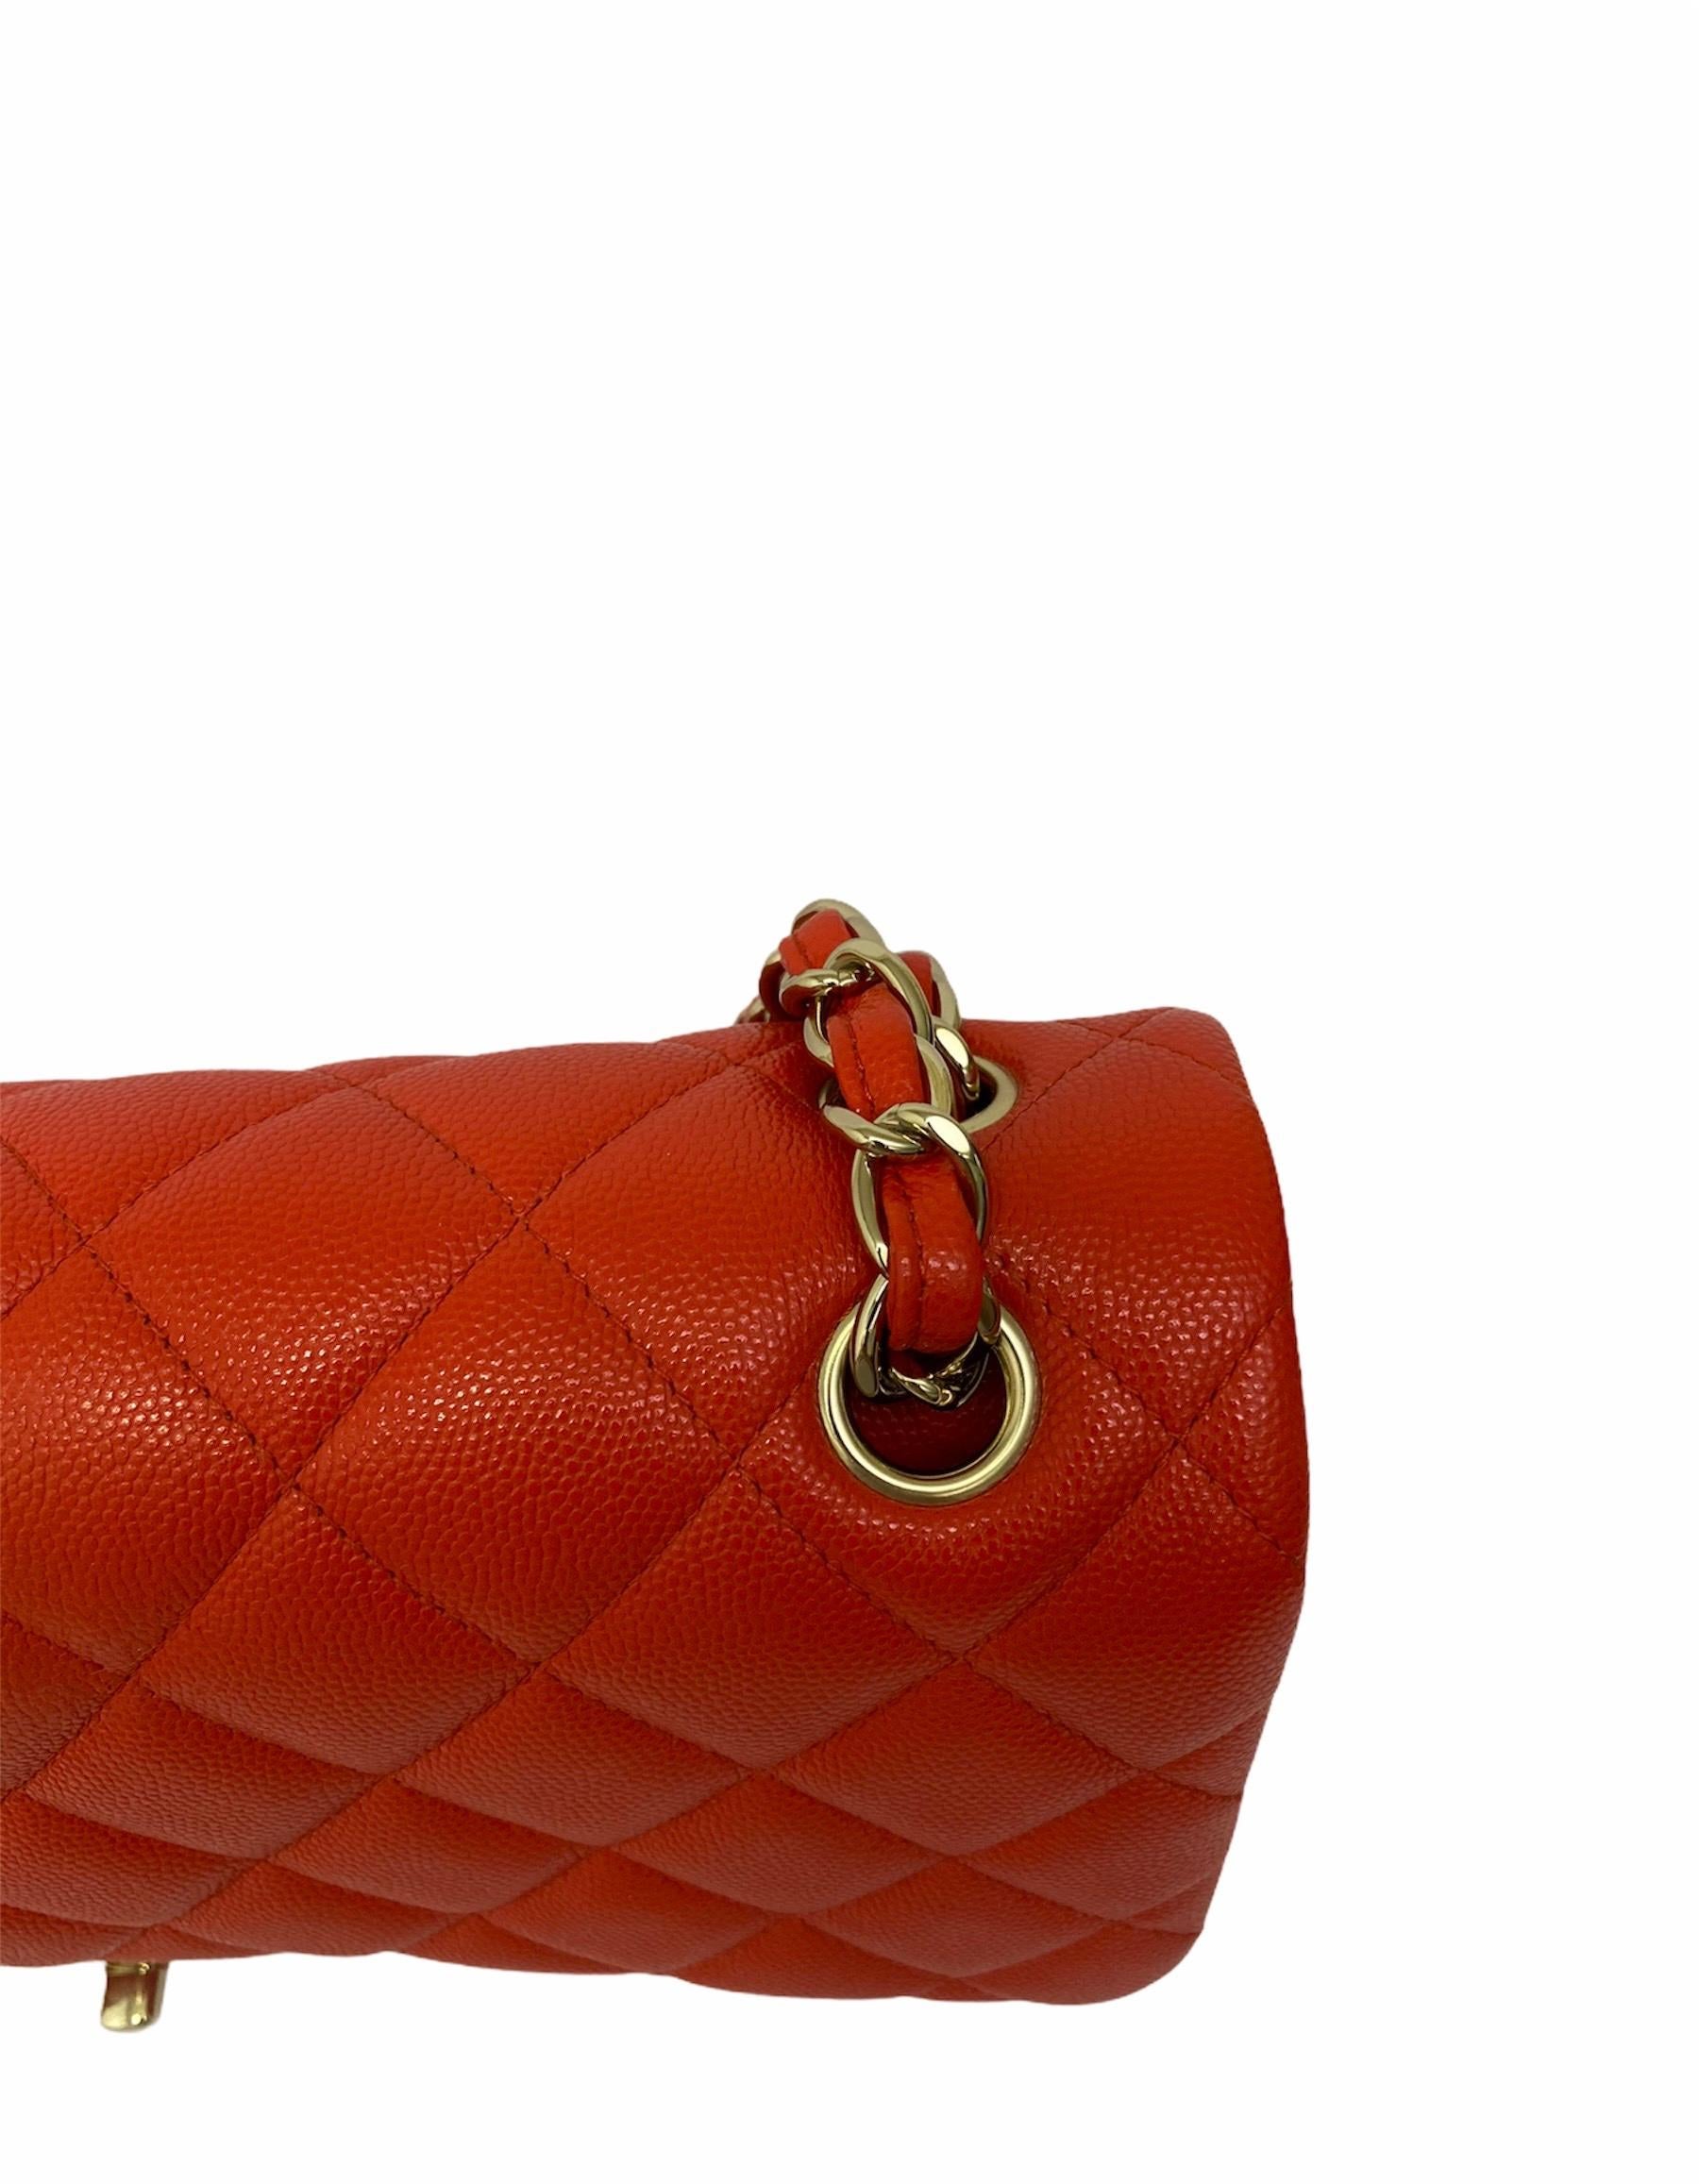 2019 Chanel Red Leather Maxi Jumbo Bag 2